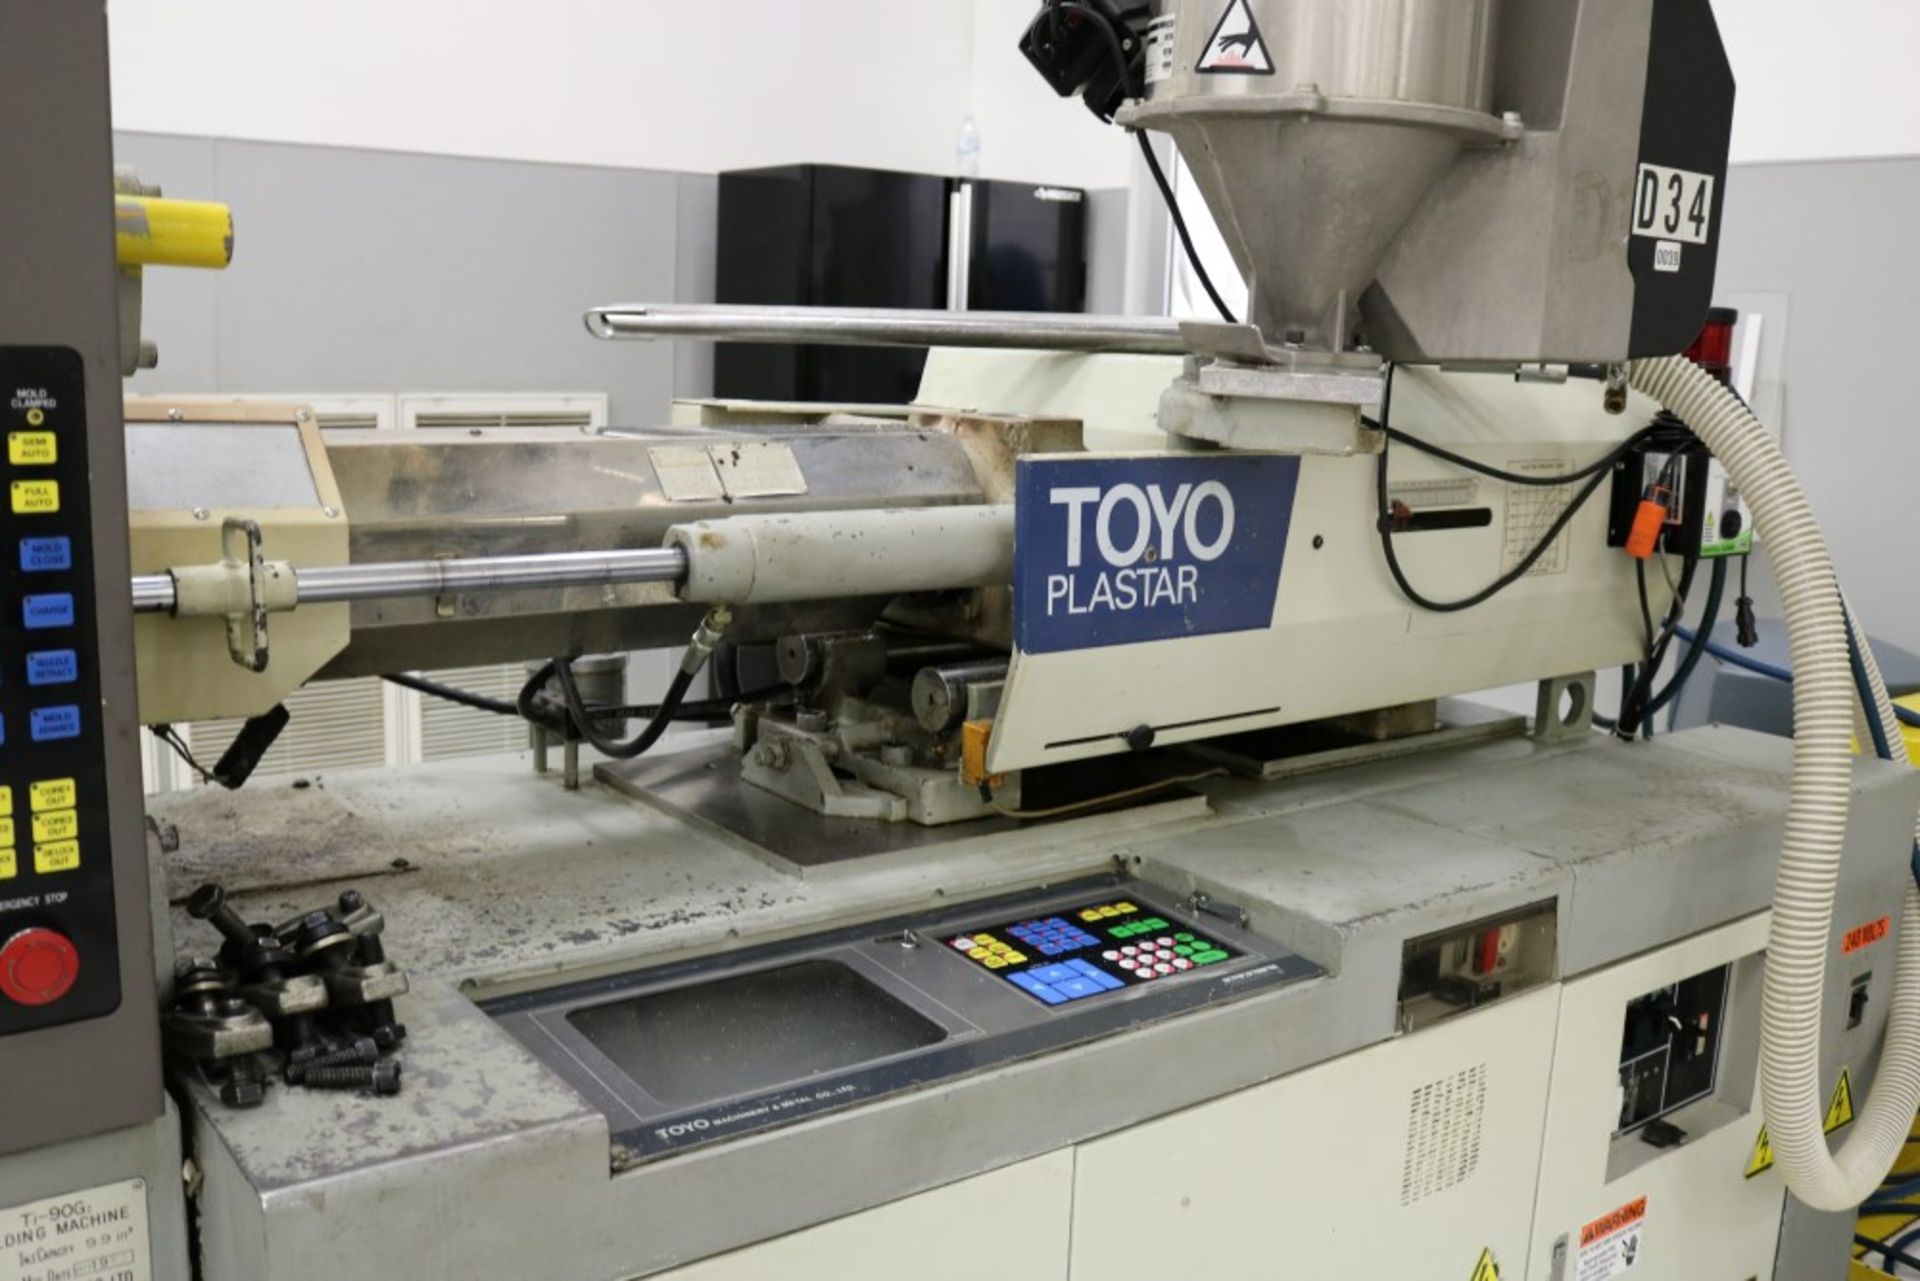 1992 Toyo 90 ton Injection Molding Machine - 5.5 oz. Shot, Core Pull, Model TI-90G2 - Image 3 of 14